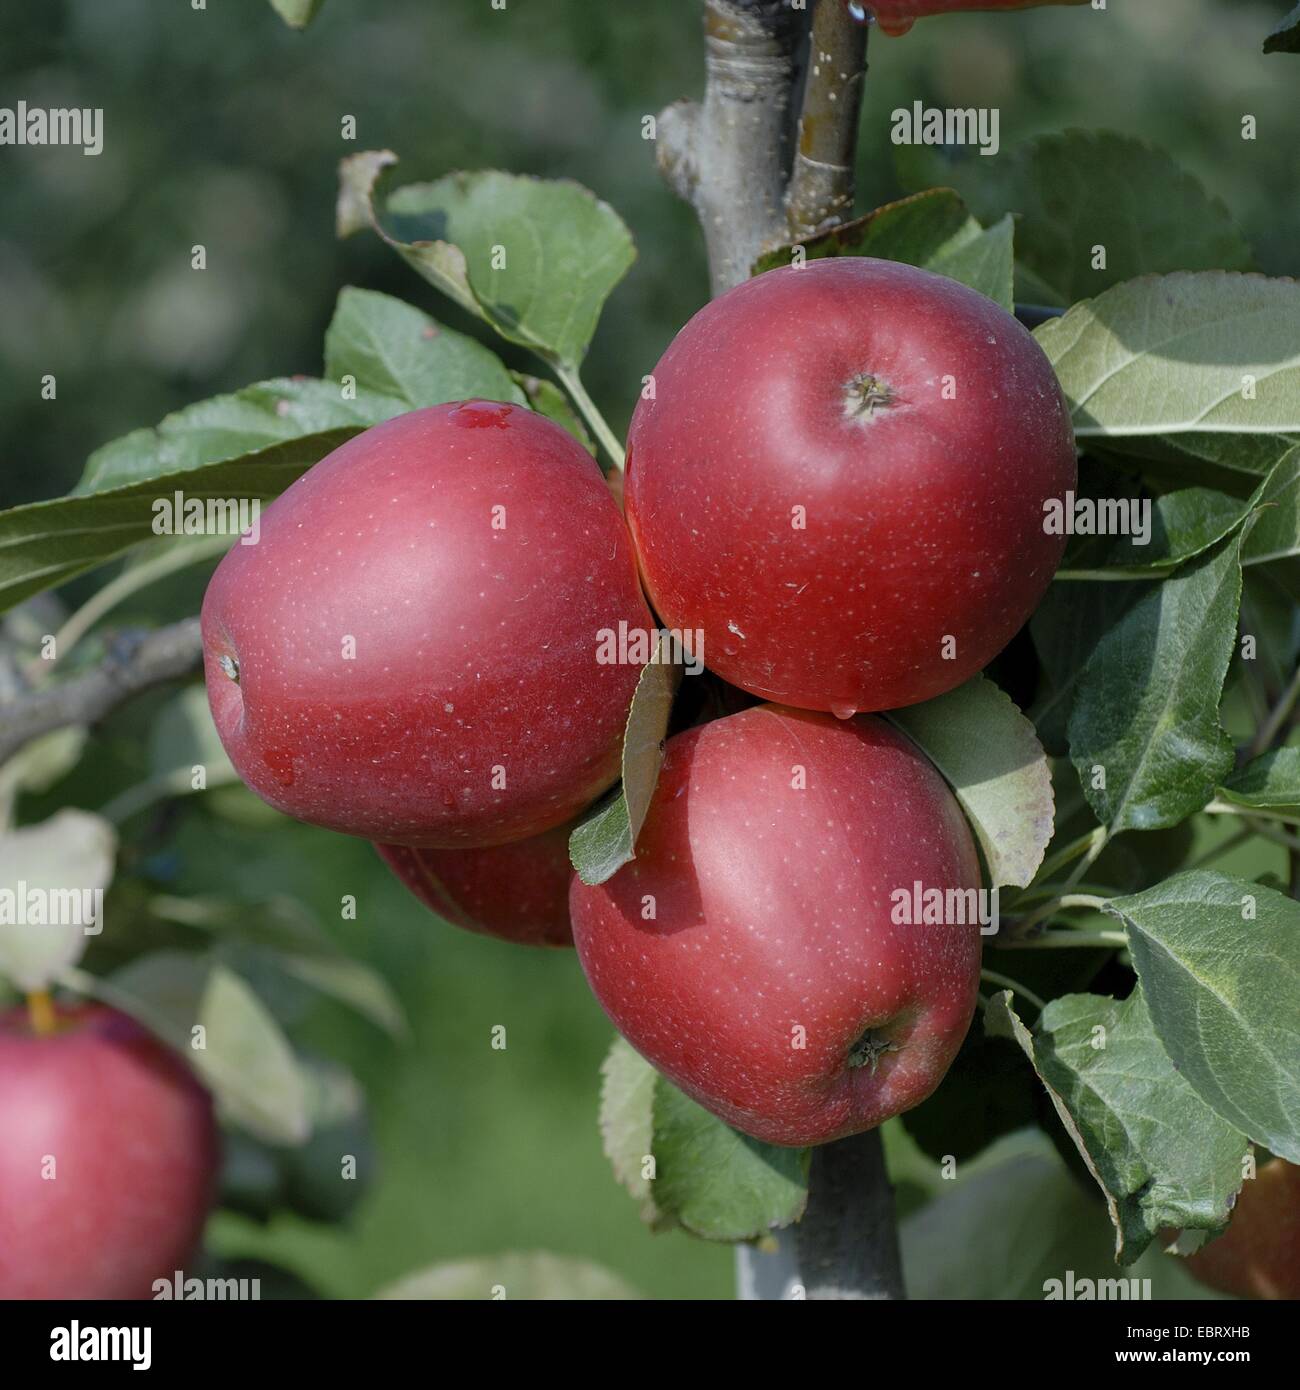 Manzano (Malus domestica 'Saturno', Malus domestica), cultivar Saturno Saturno, manzanas de un árbol Foto de stock